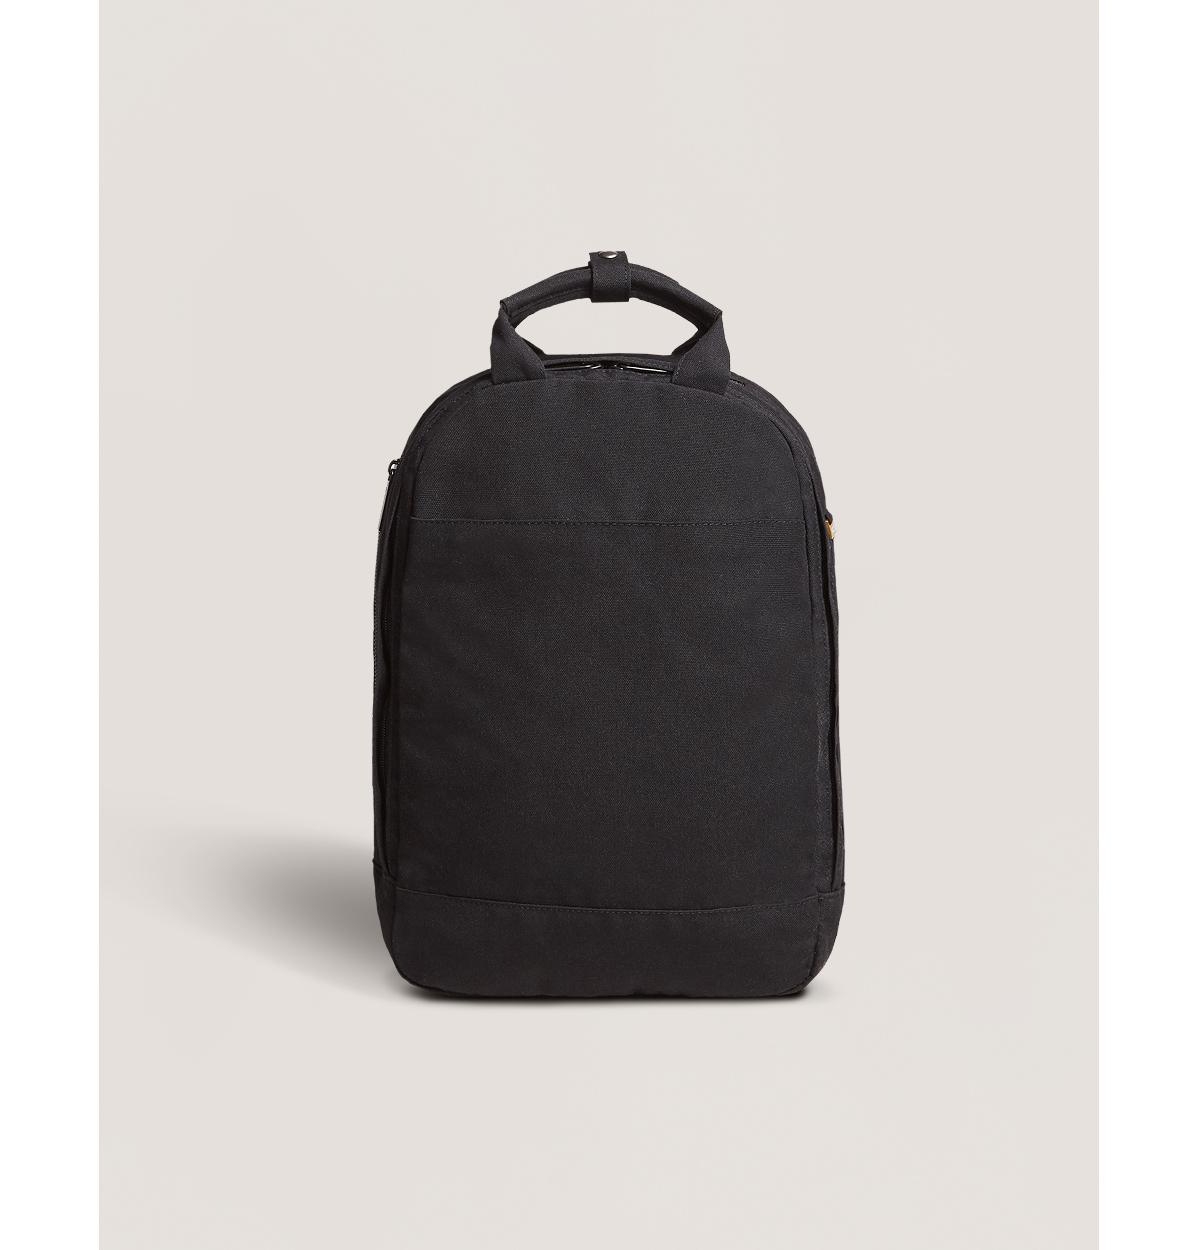 Backpack Pro Slim - Navy